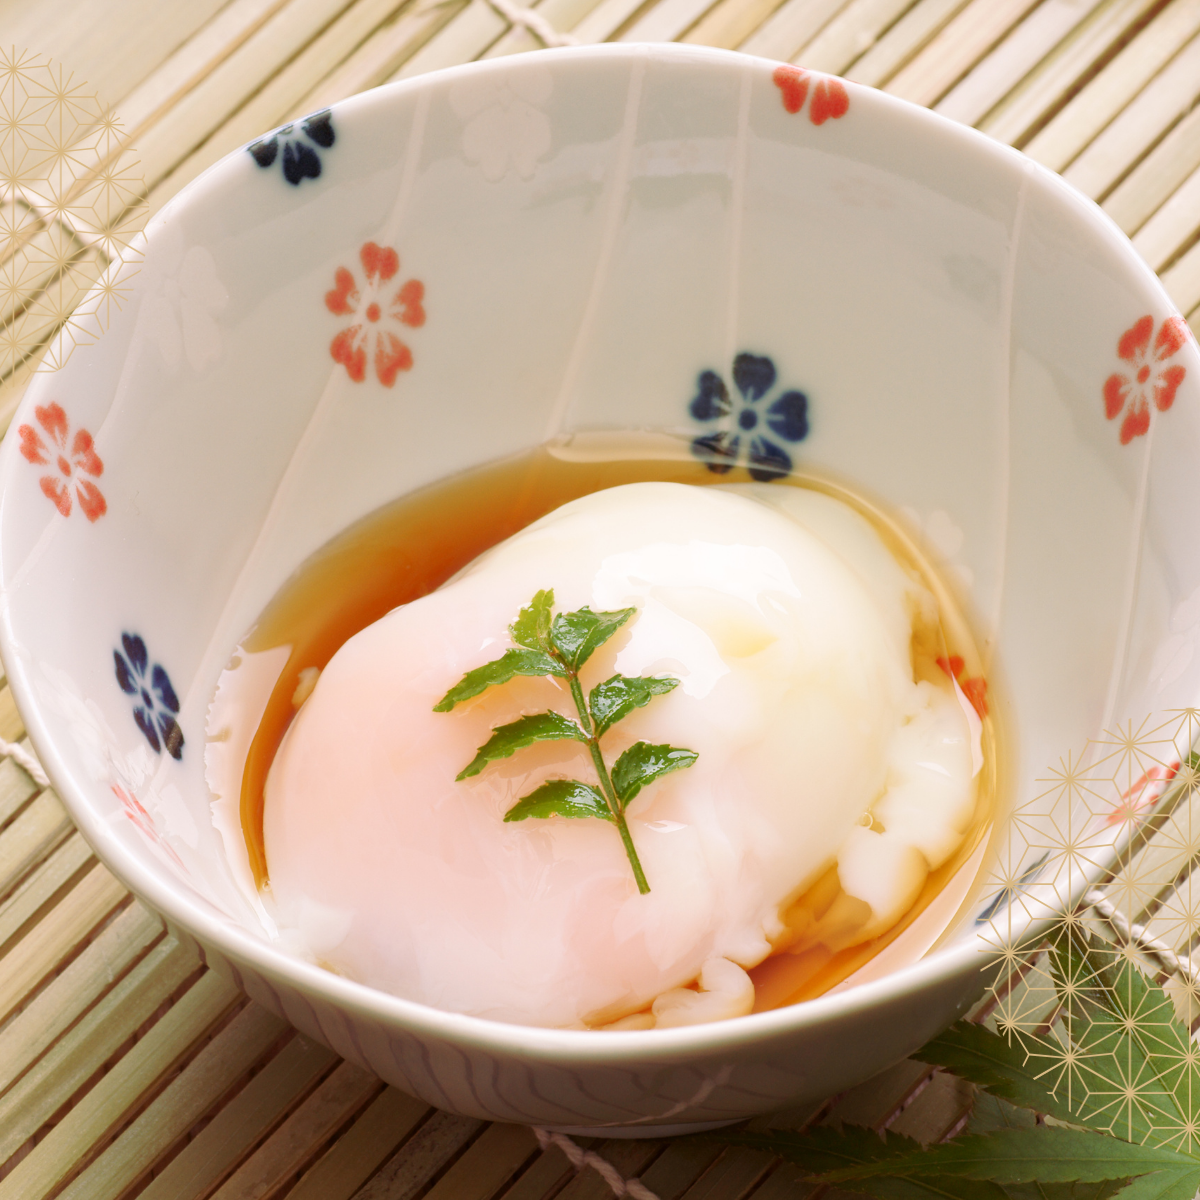 Onsen Tamago – “The Longevity Egg” of the Japanese